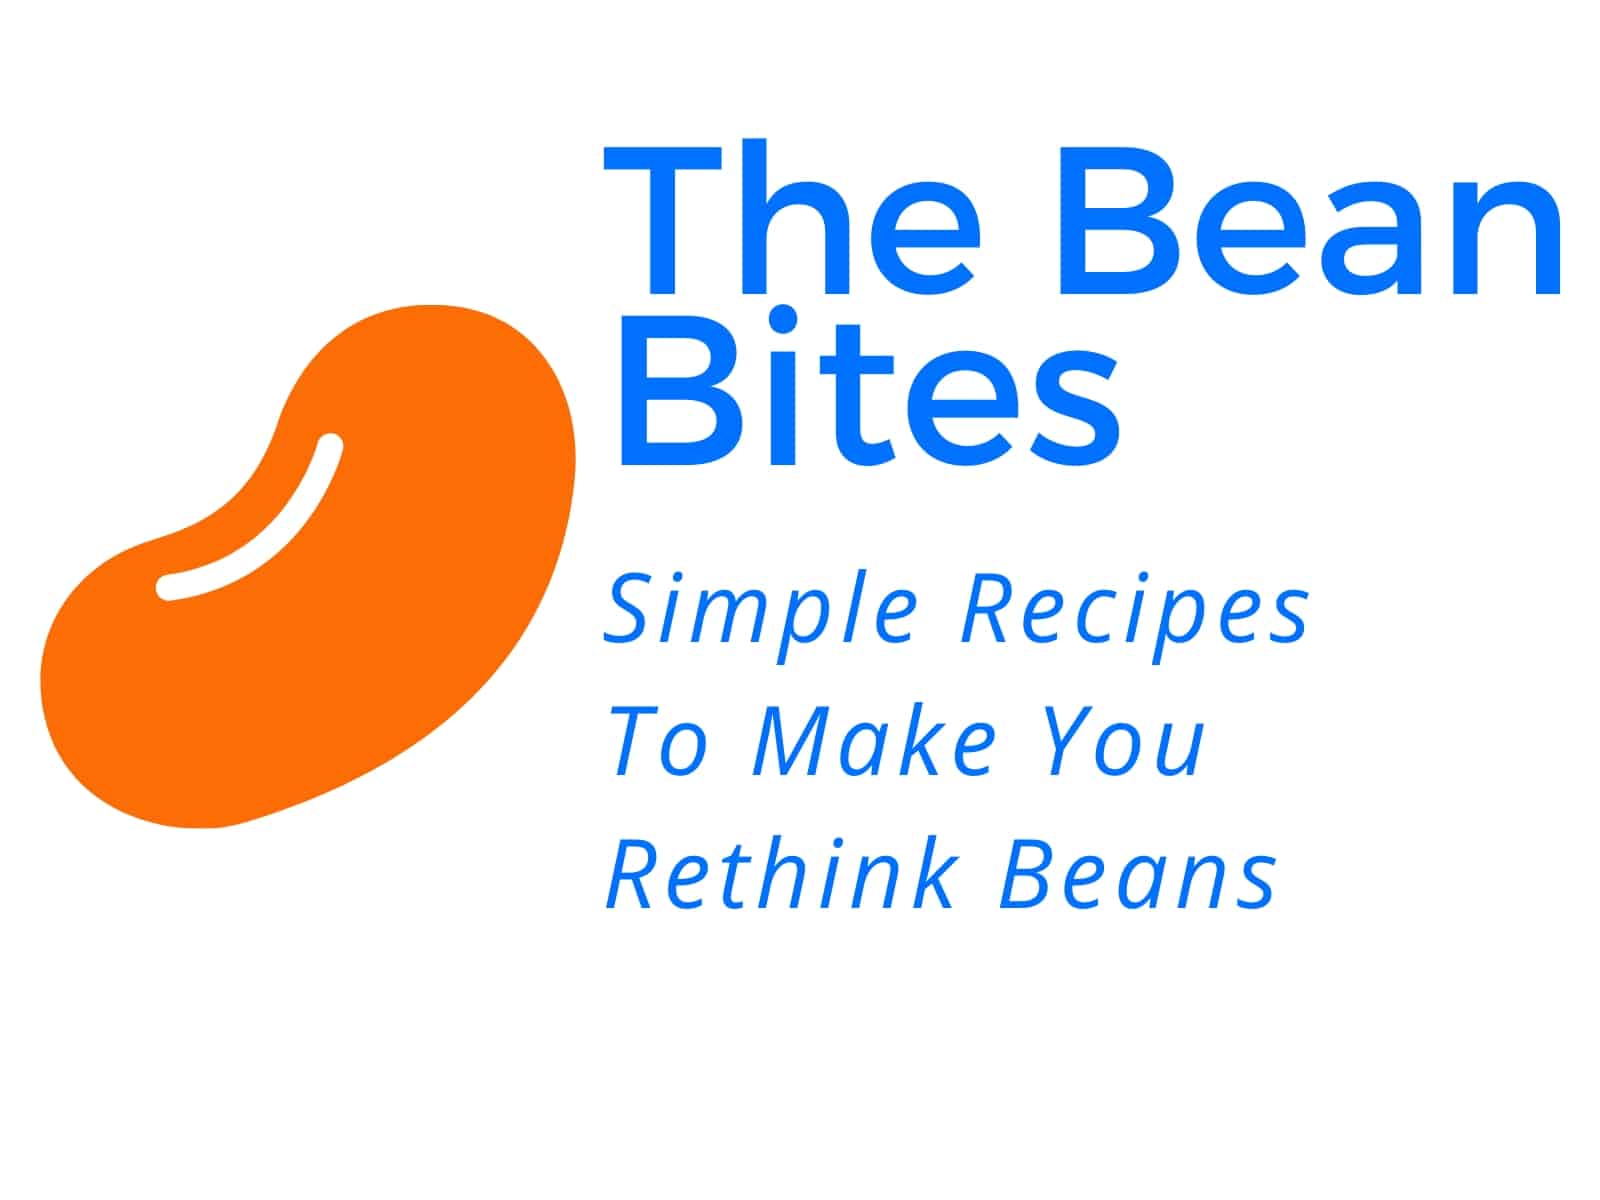 The Bean Bites